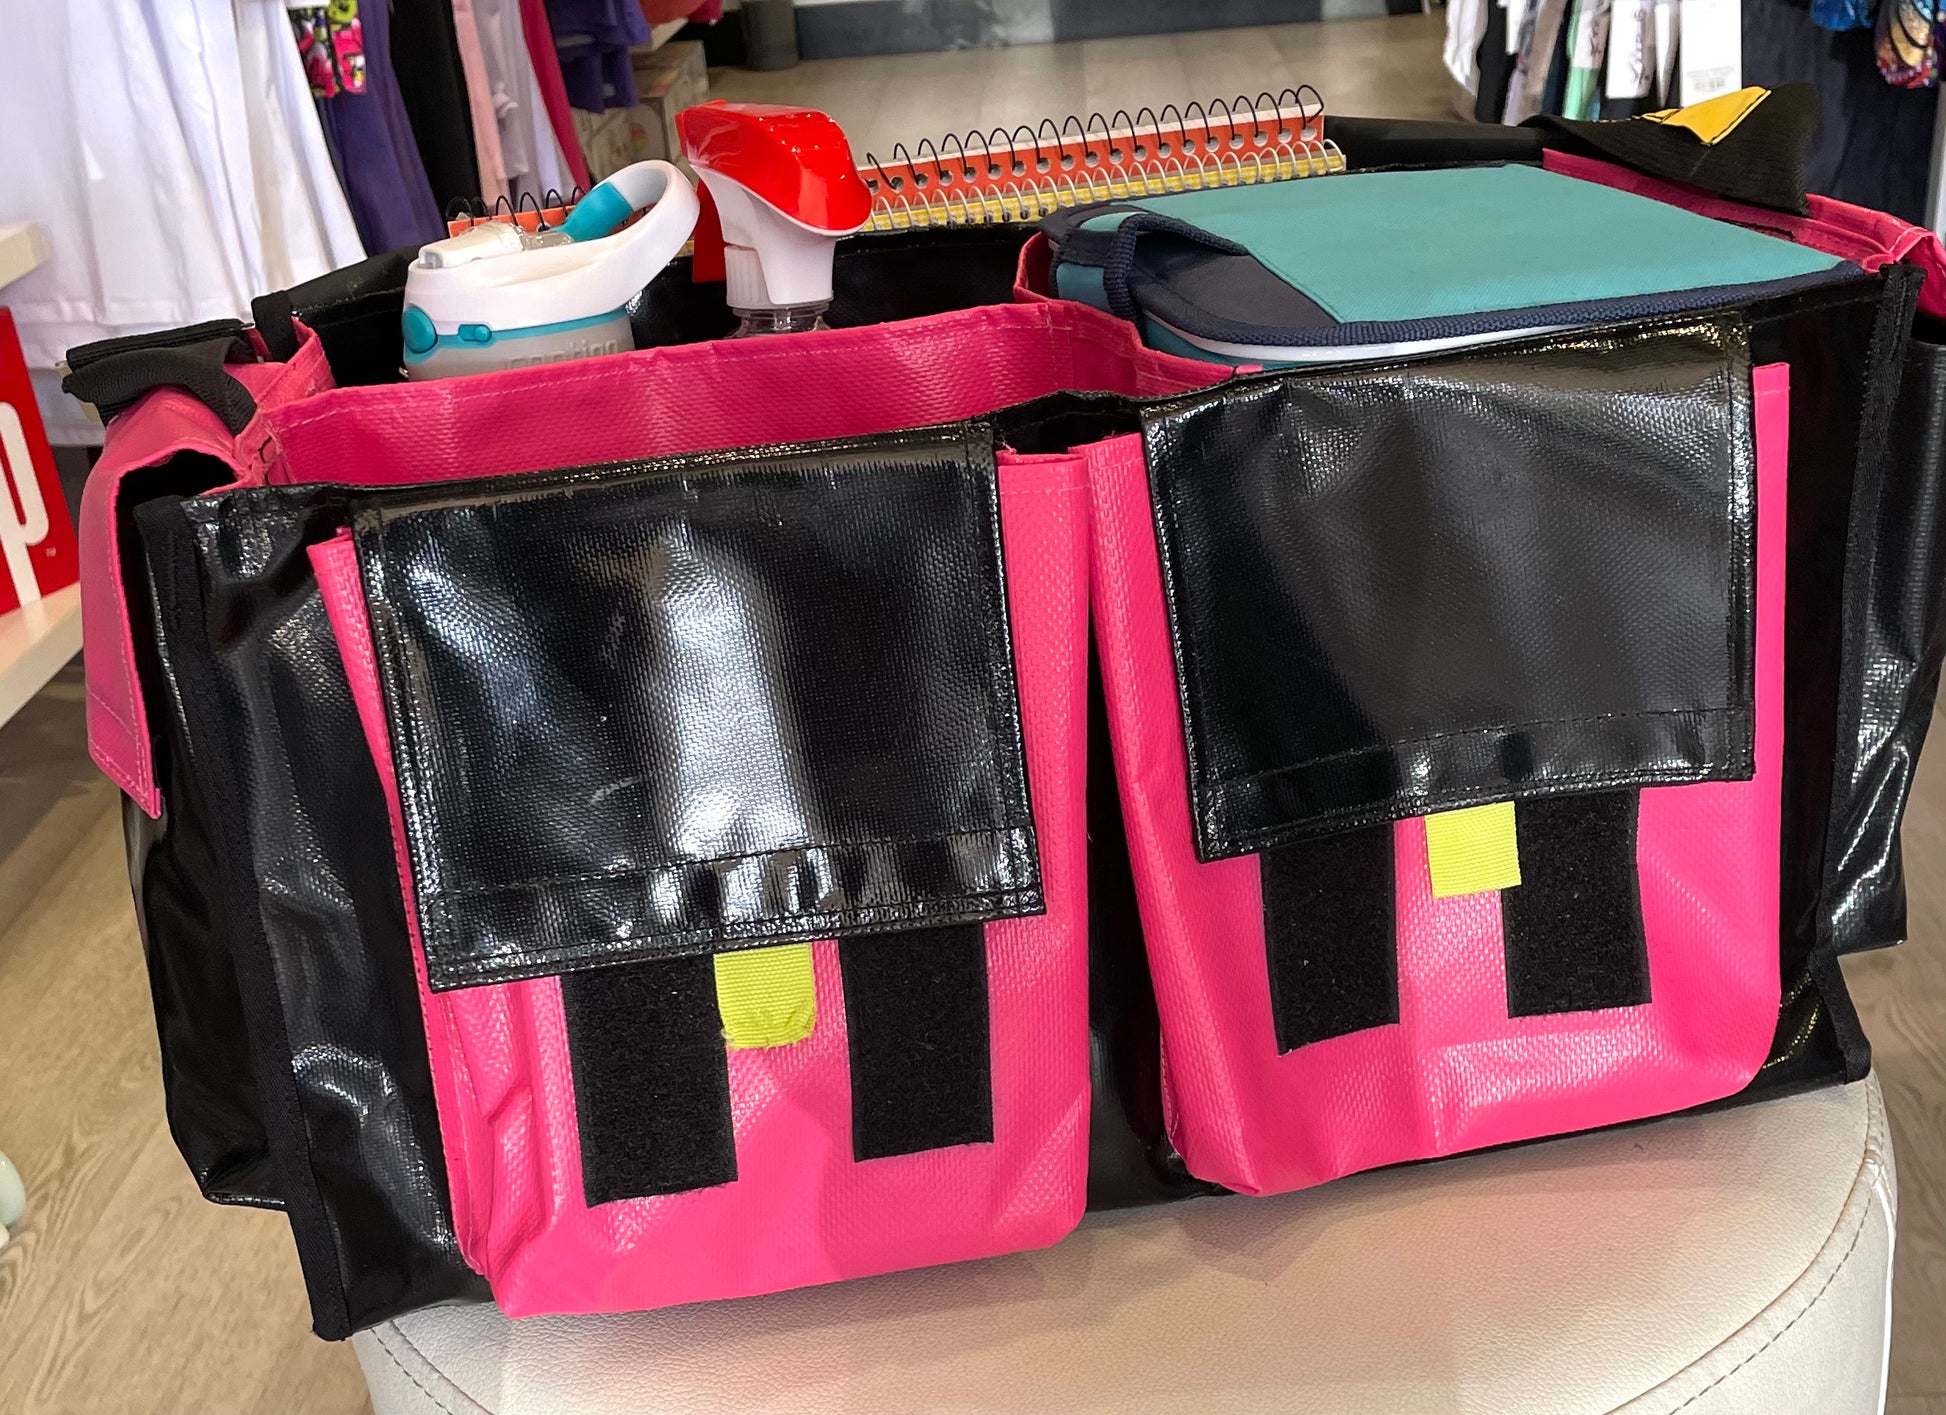 CribBags Extra Large Black and Pink Crib bag. Tough Vinyl Construct 4 pockets outside, 3 pockets inside.